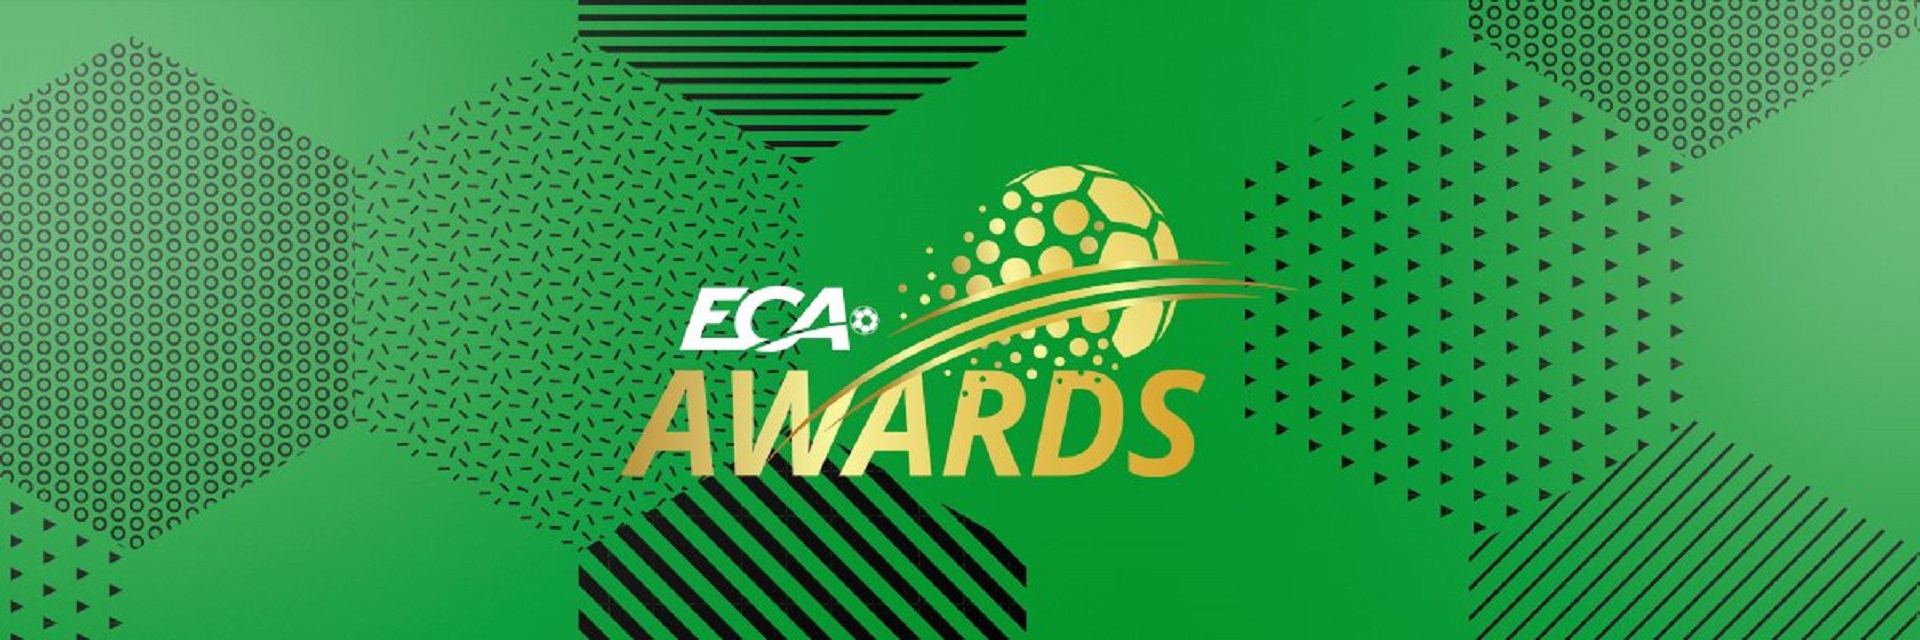 Eight clubs shortlisted for the ECA CSR Award 2018 - ECA